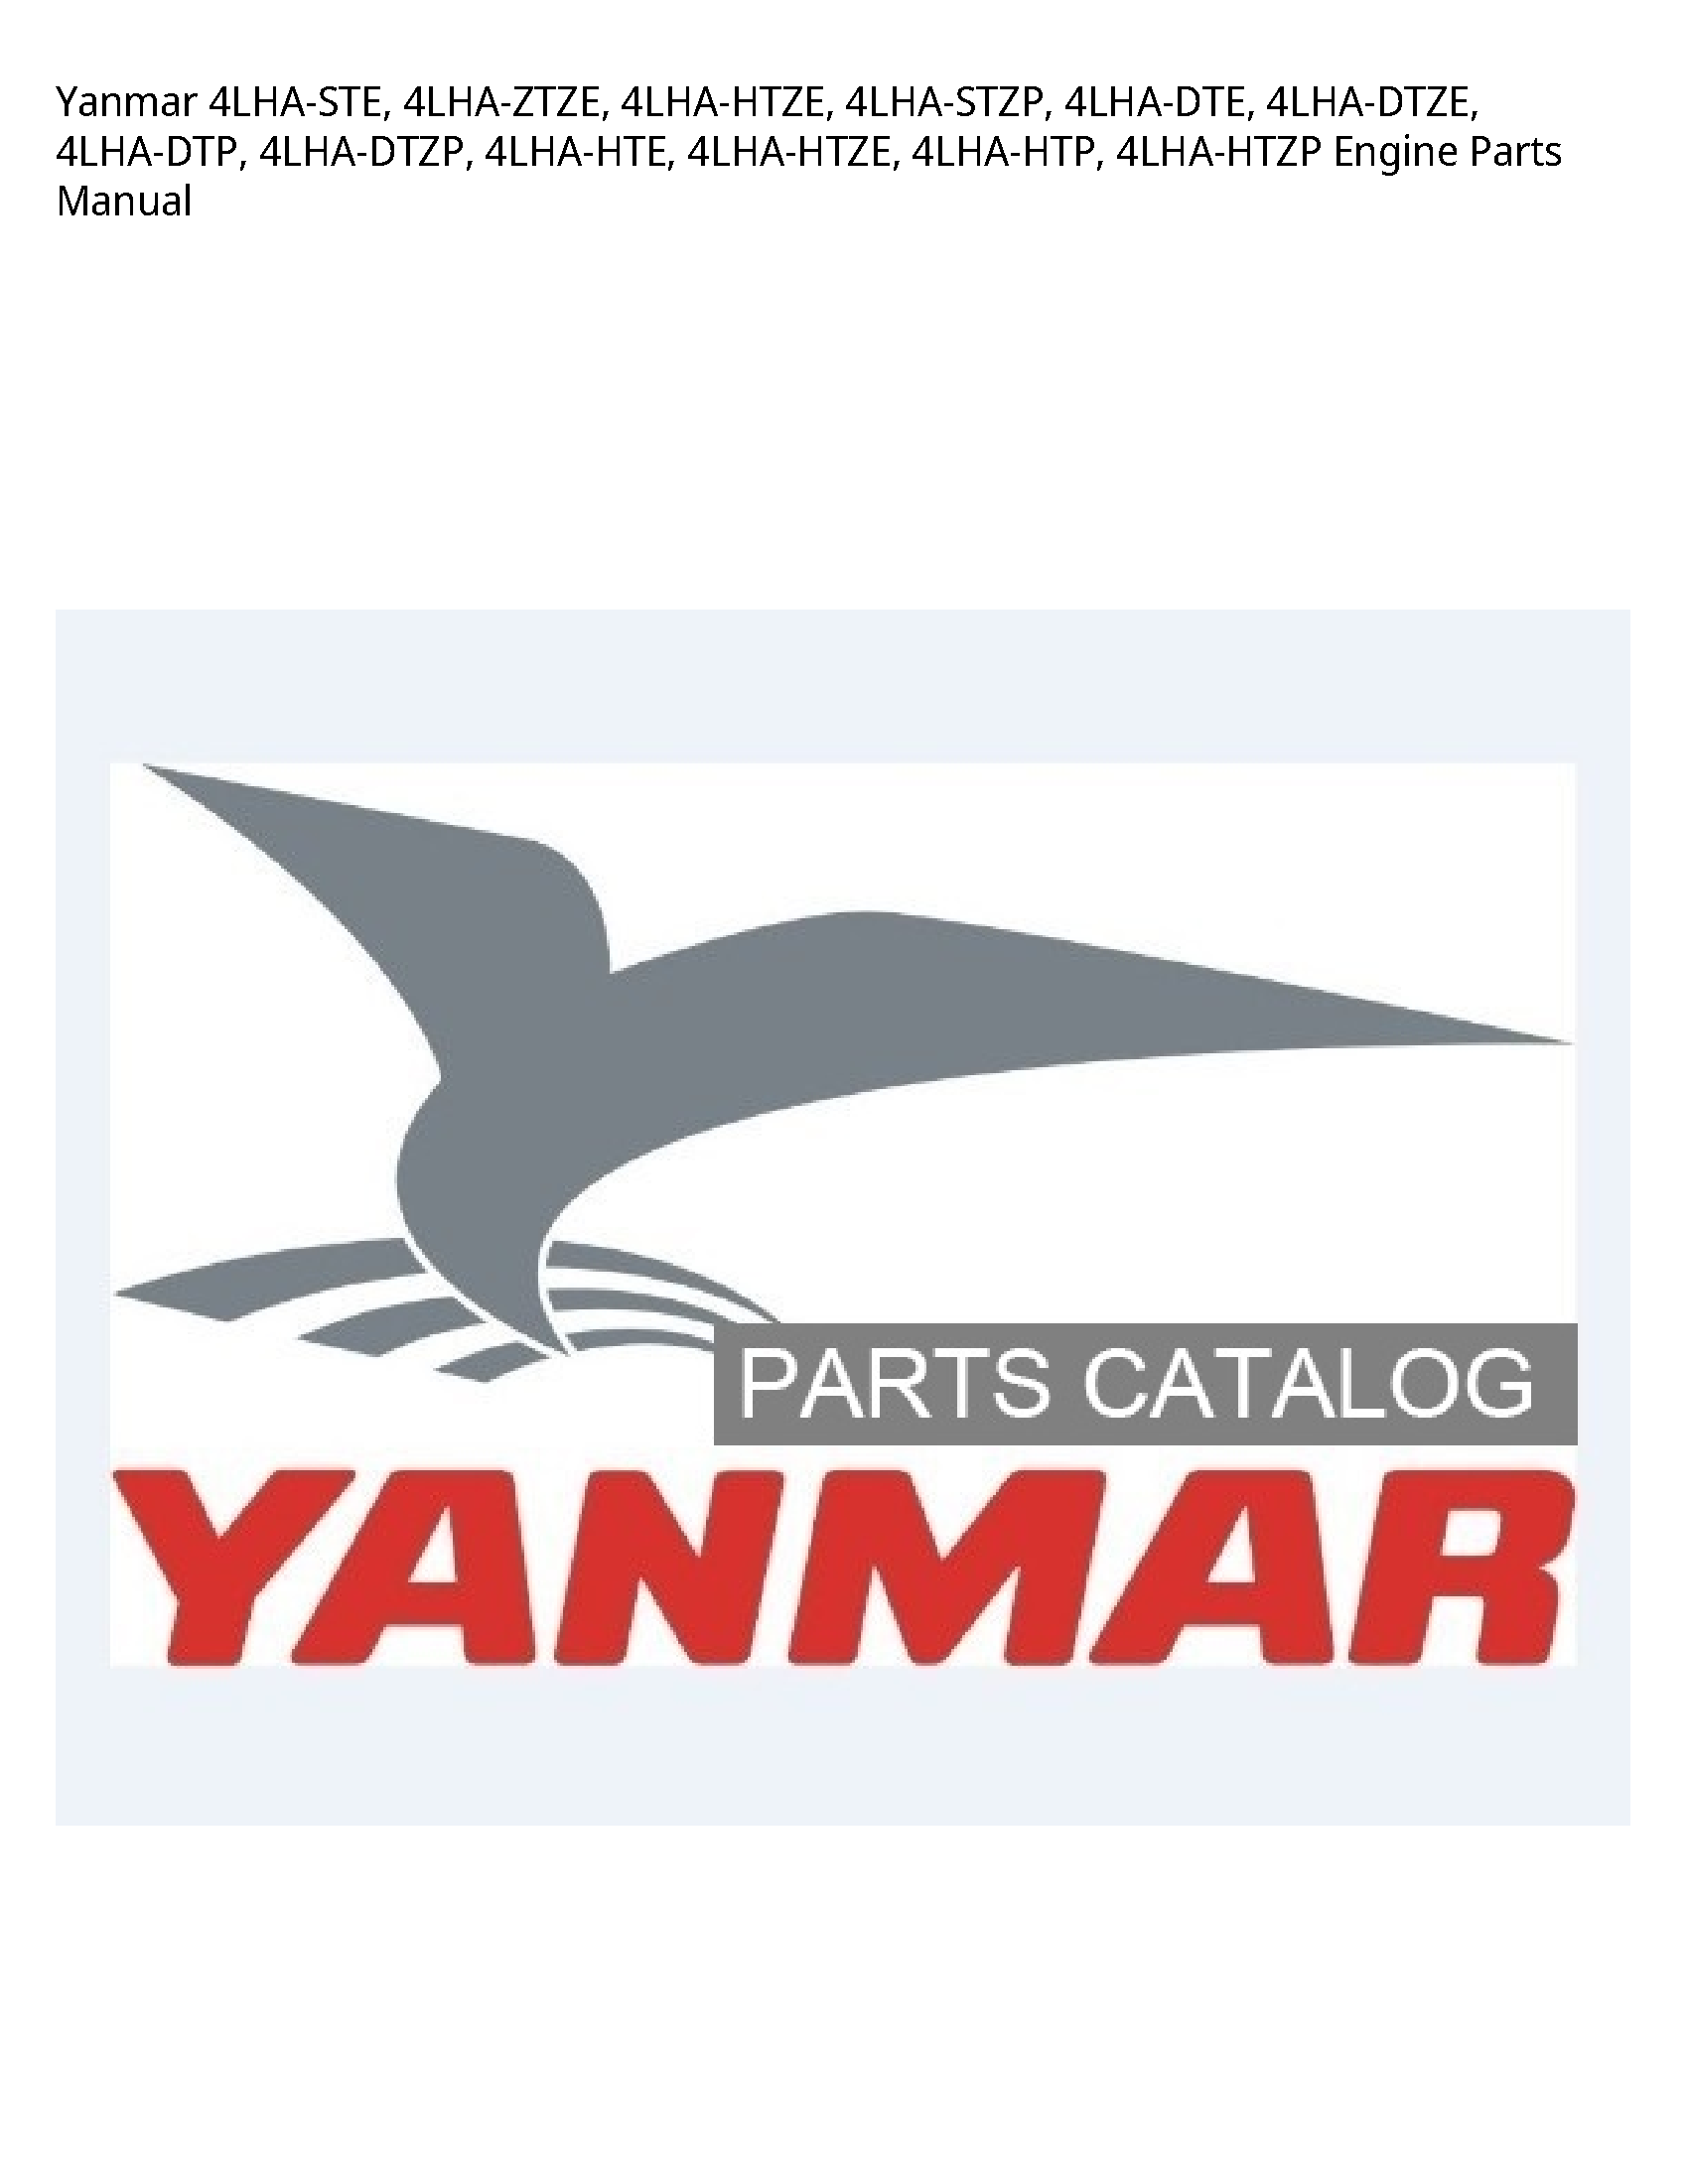 Yanmar 4LHA-STE Engine Parts manual